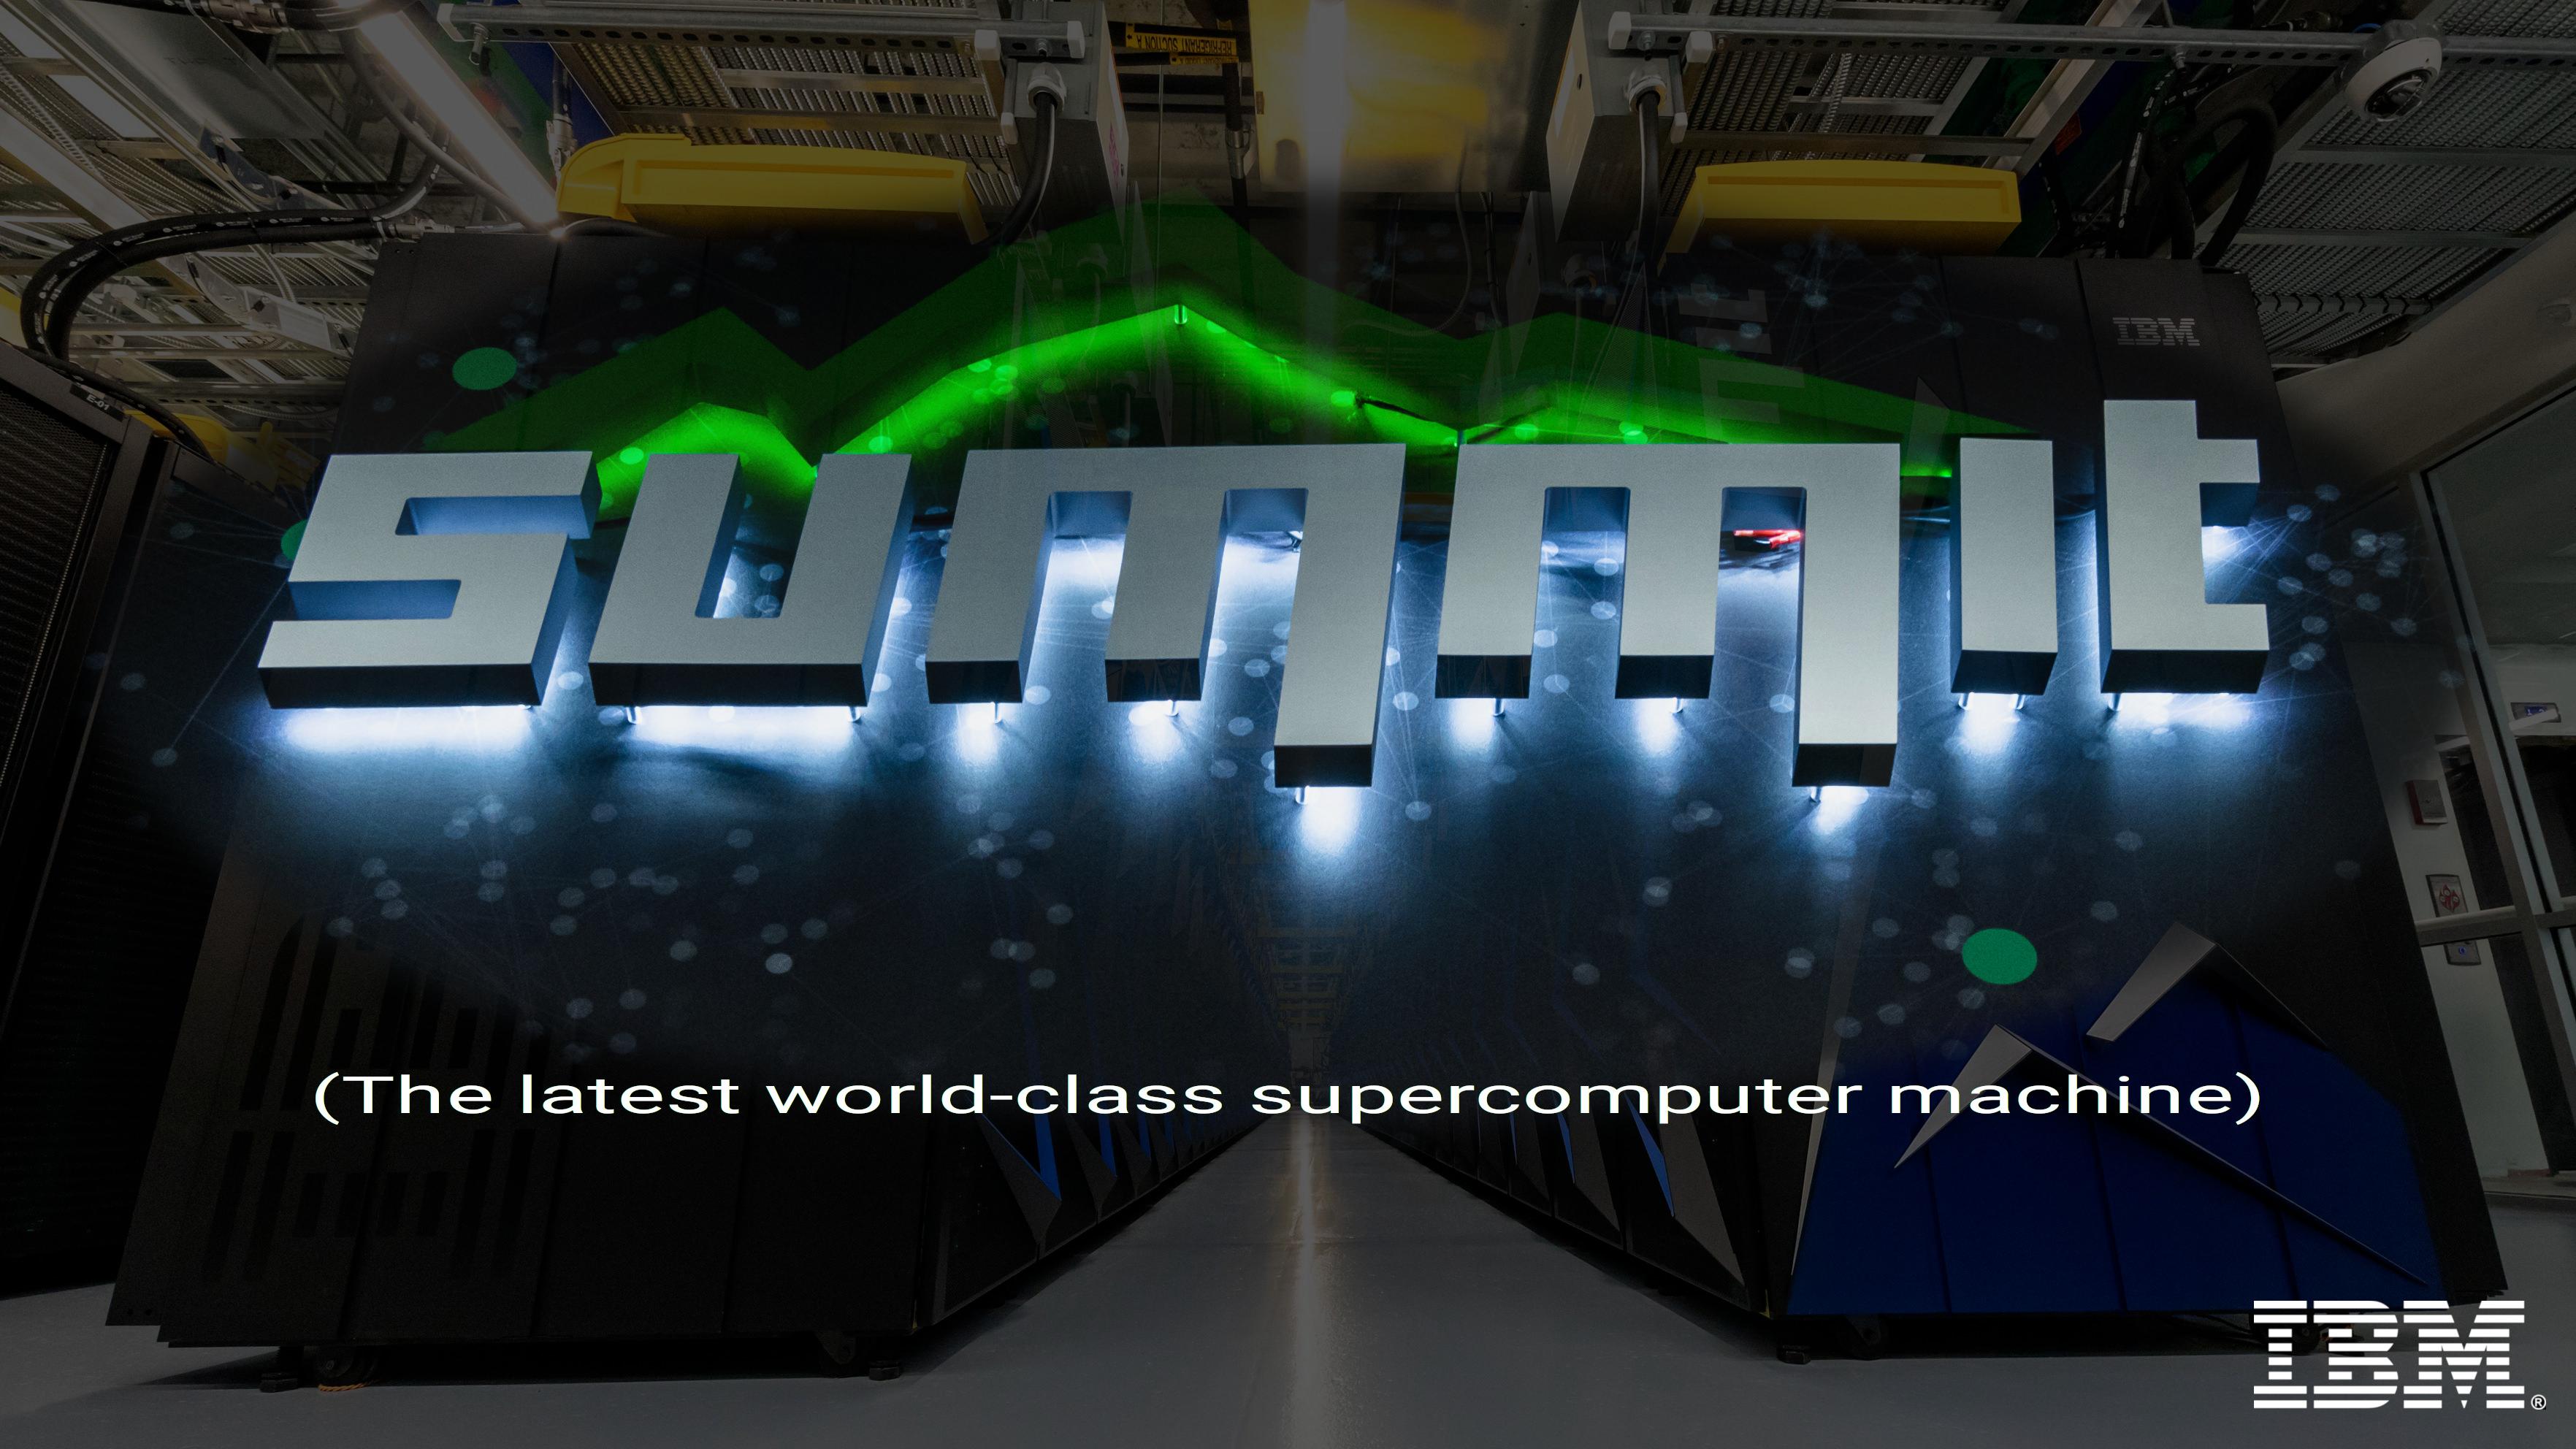 Summit - the world’s most powerful supercomputer